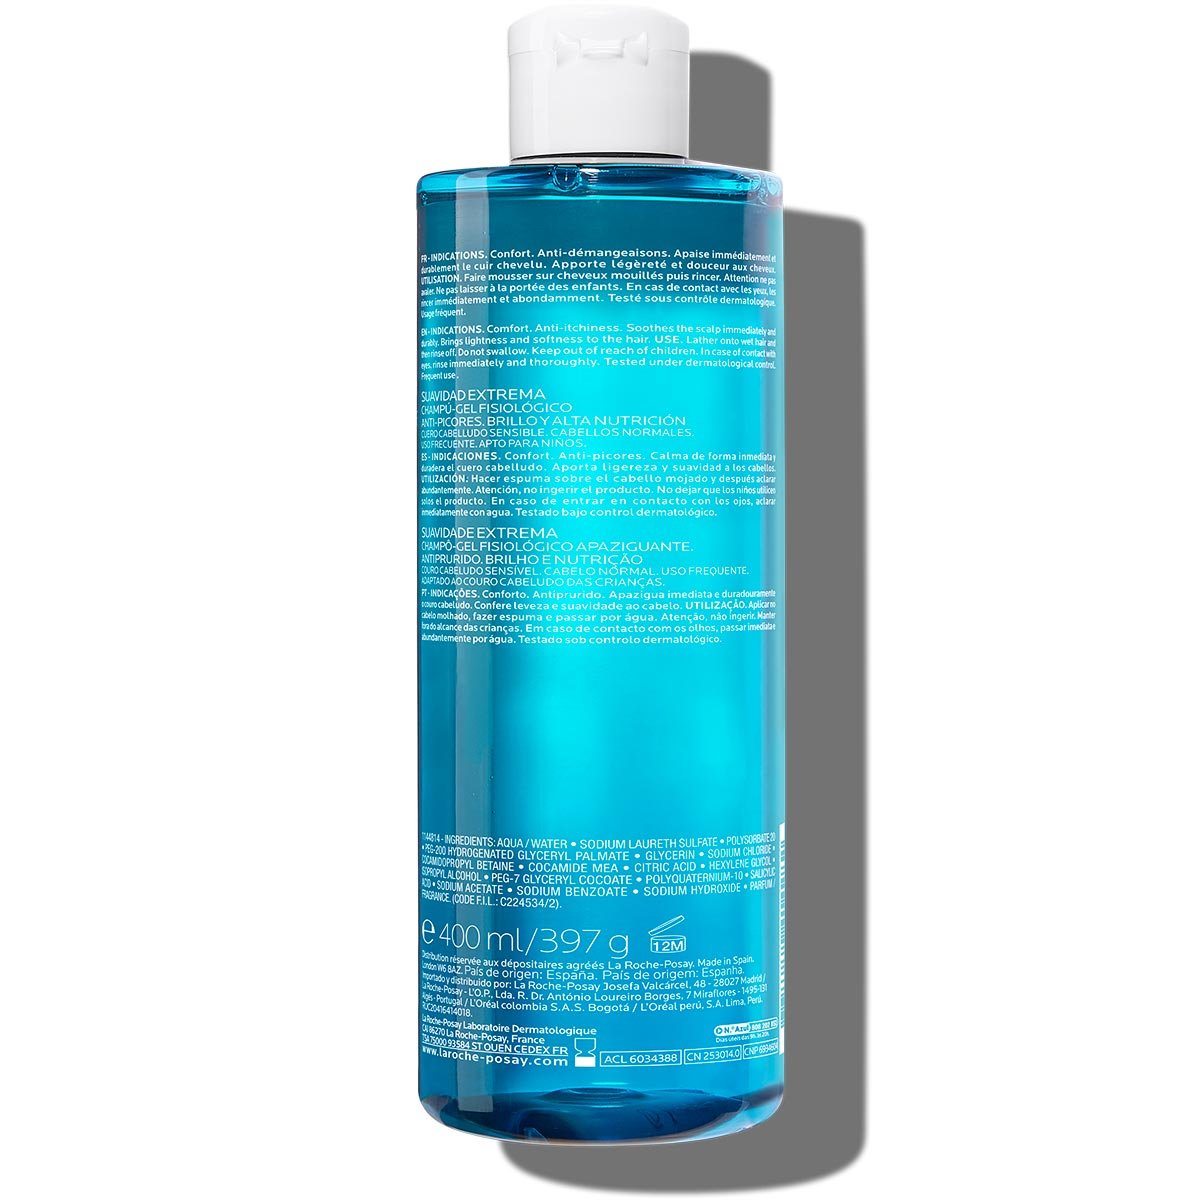 La Roche Posay ProductPage Kerium Extra Gentle Gel Shampoo 400ml 33378